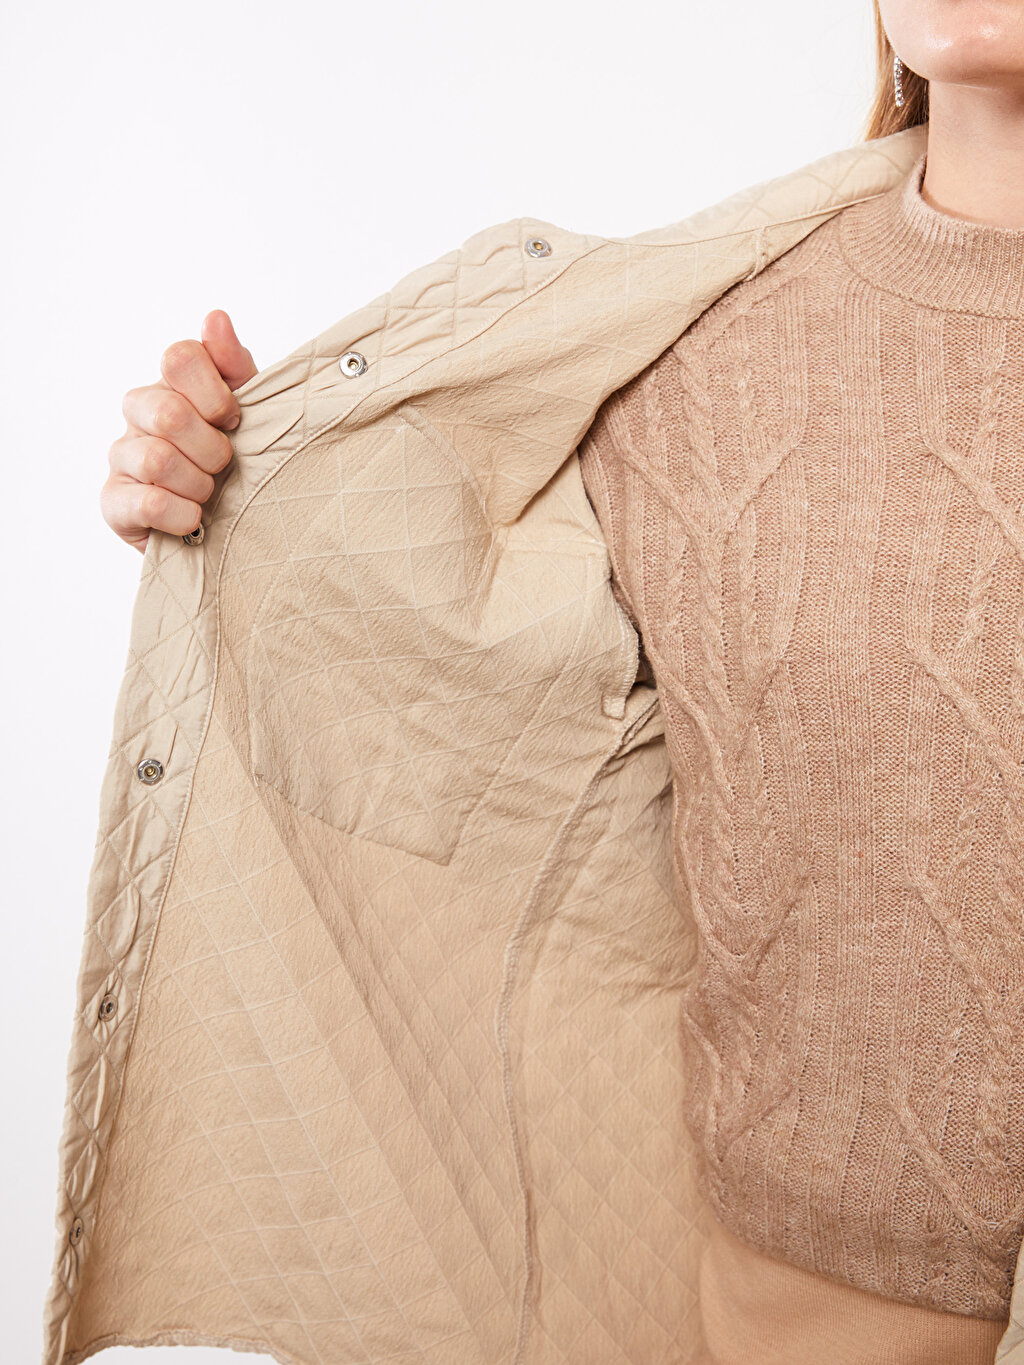 Shirt Neck Quilted Patterned Long Sleeve Women's Jacket -W2EK58Z8 